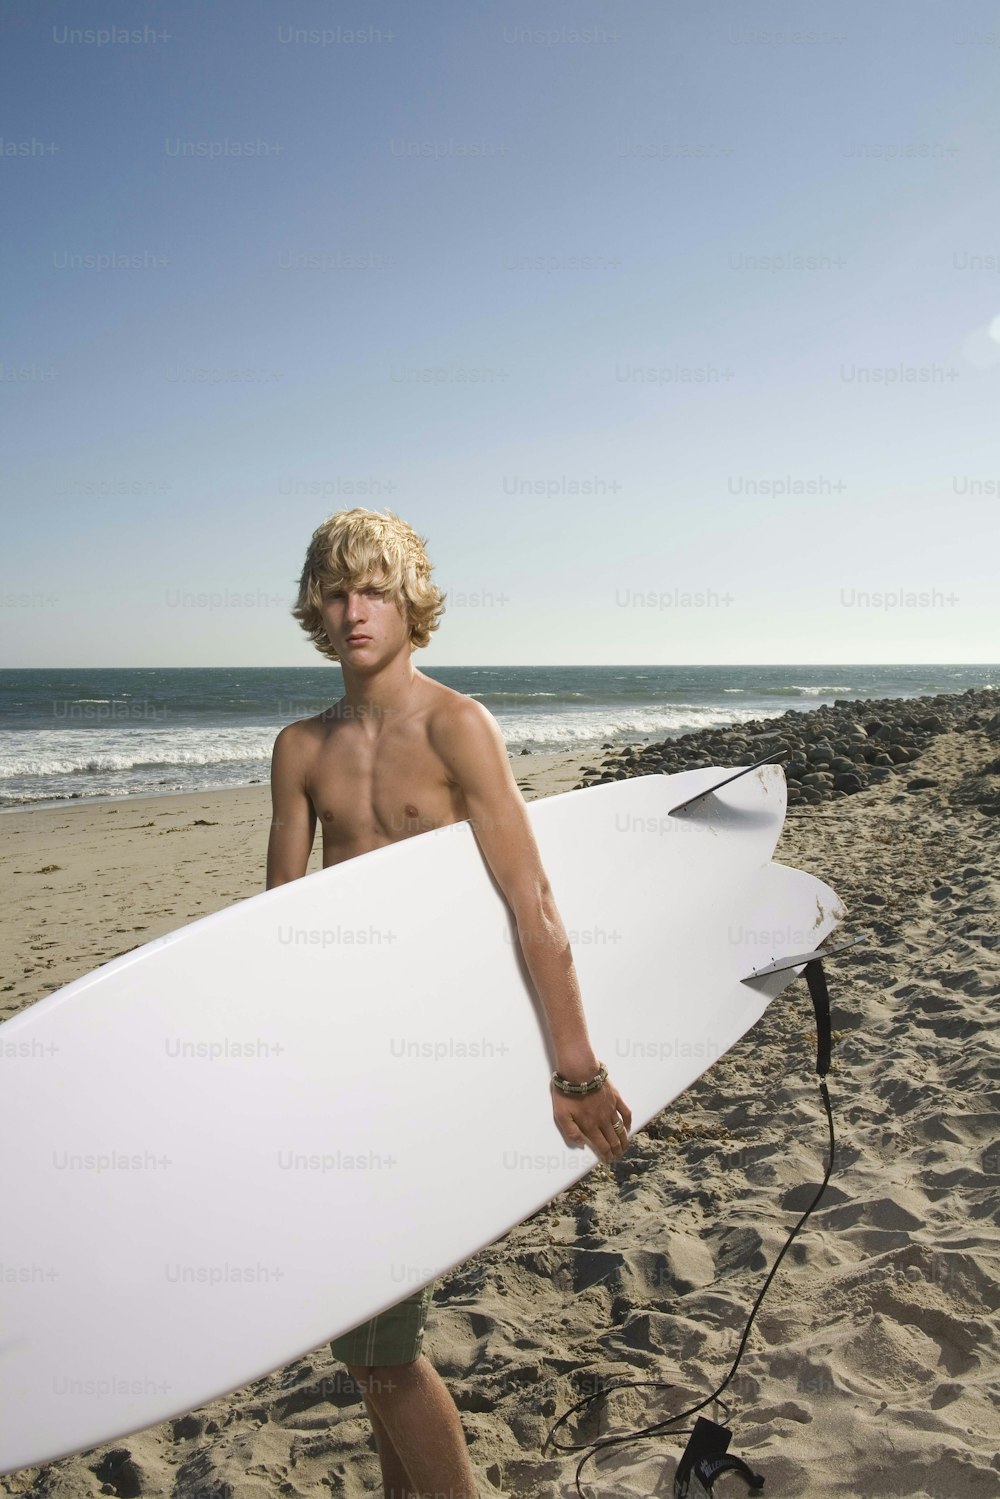 a man holding a white surfboard on a beach